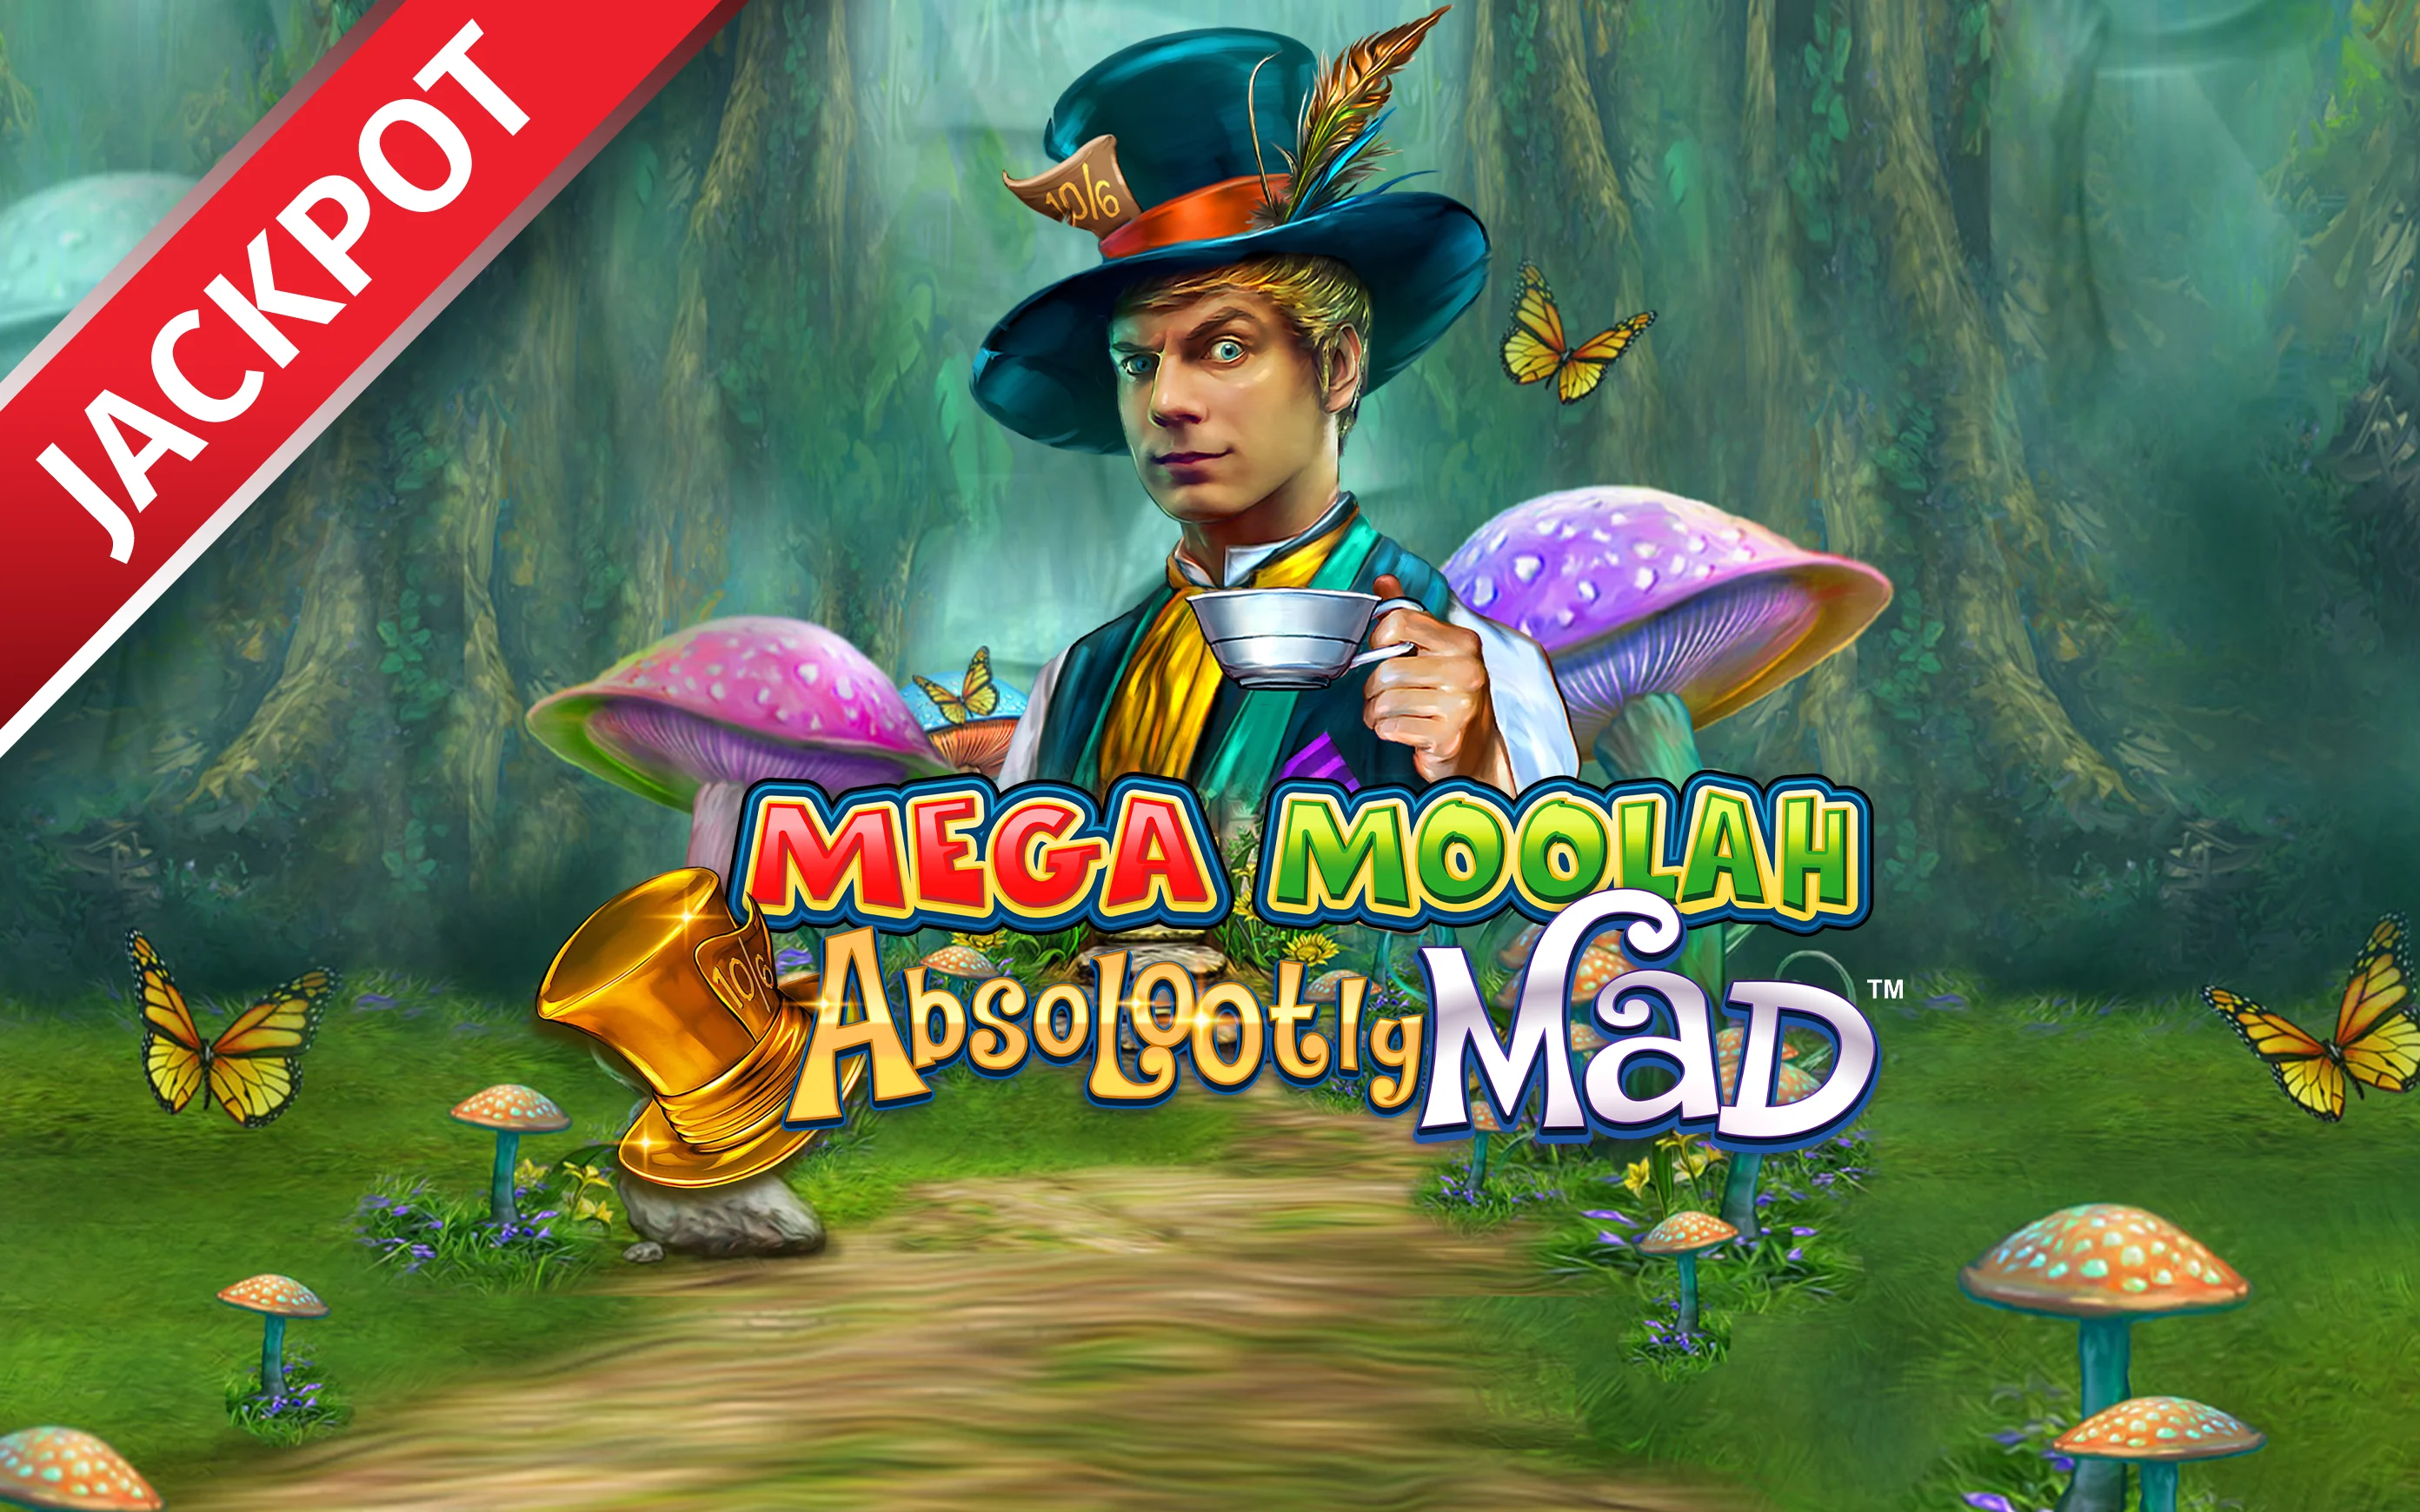 Joacă Absolootly Mad Mega Moolah™ în cazinoul online Starcasino.be